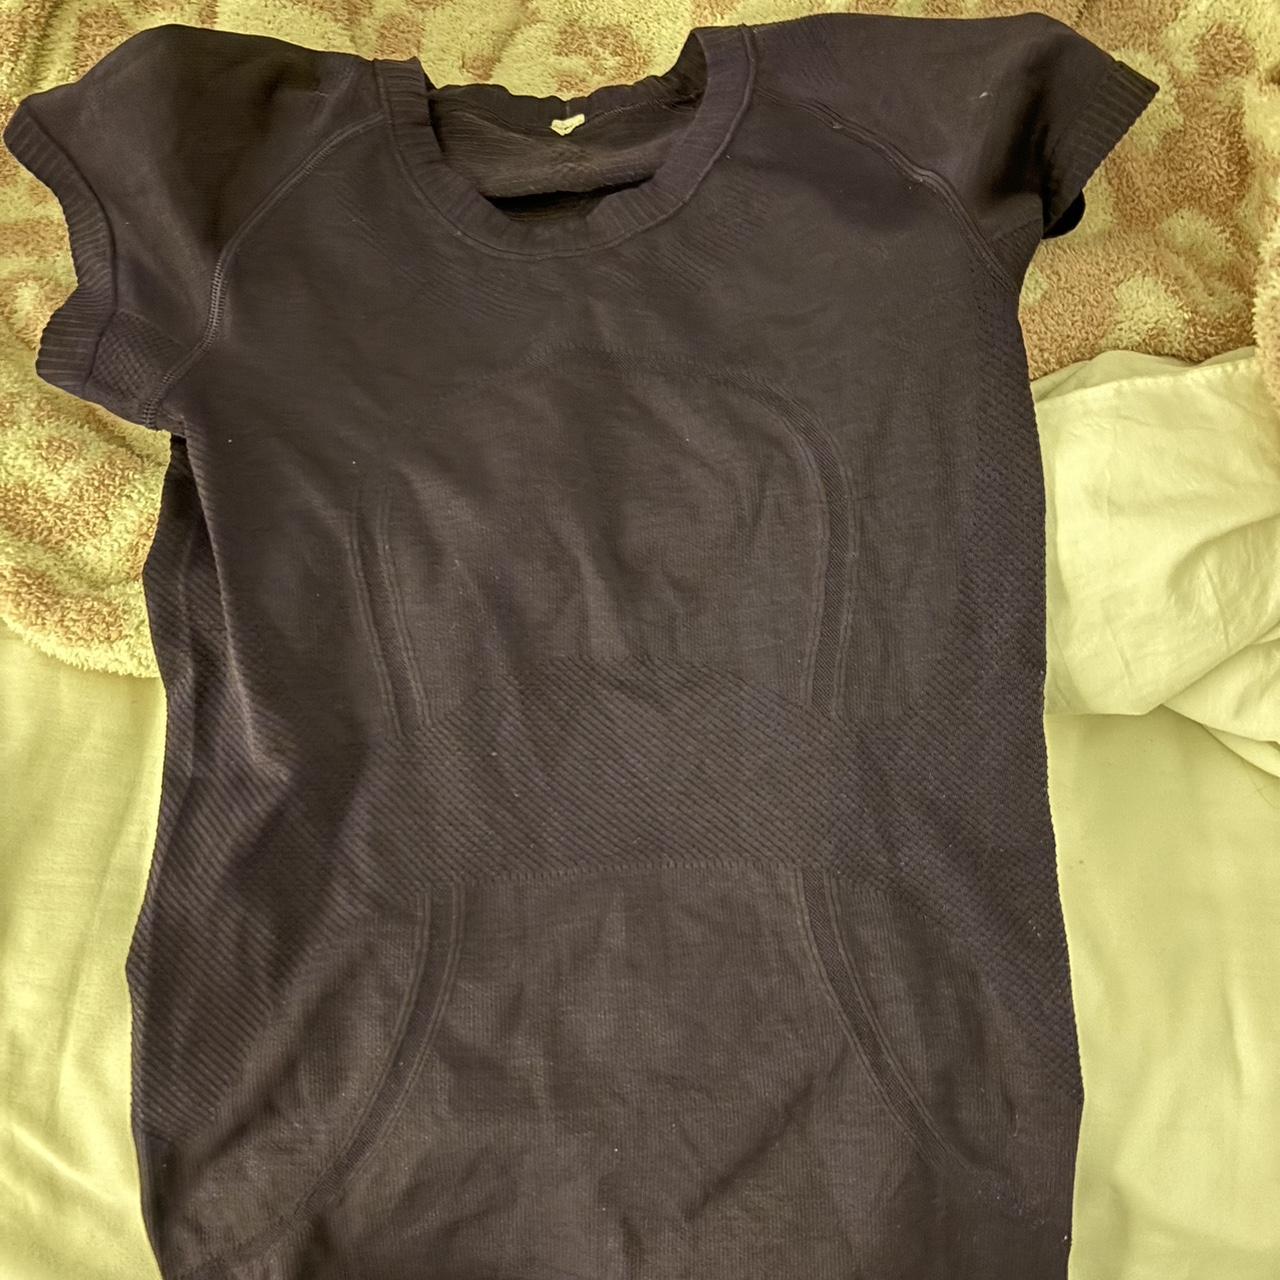 lululemon swiftly tech shirt size 2 dark purple will... - Depop